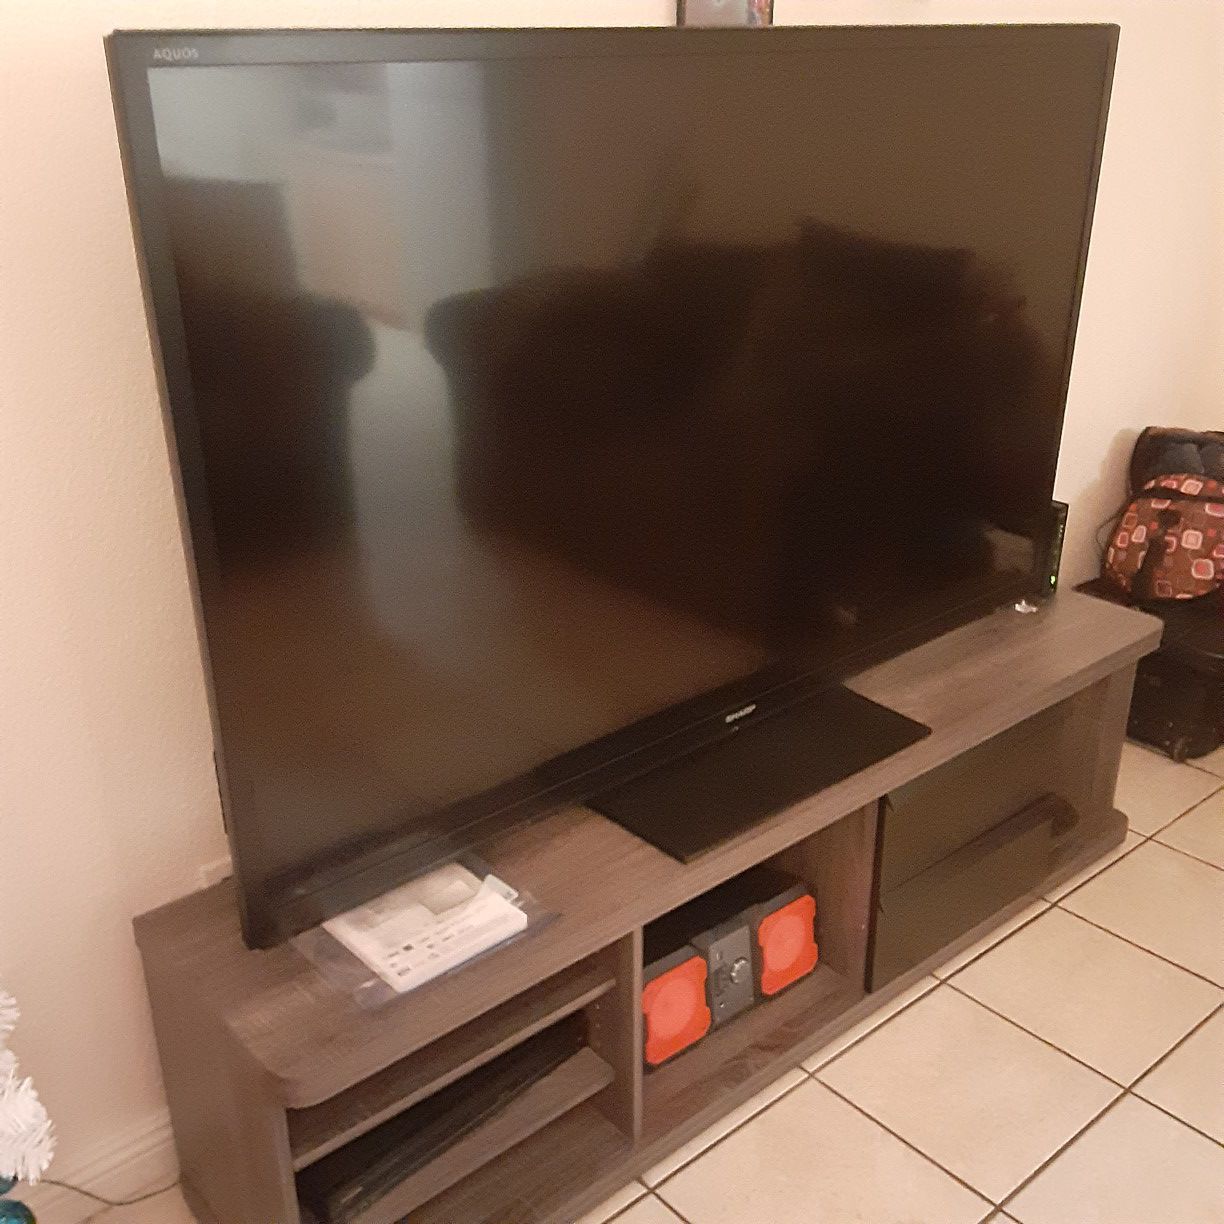 70" smart 3D tv .. $420